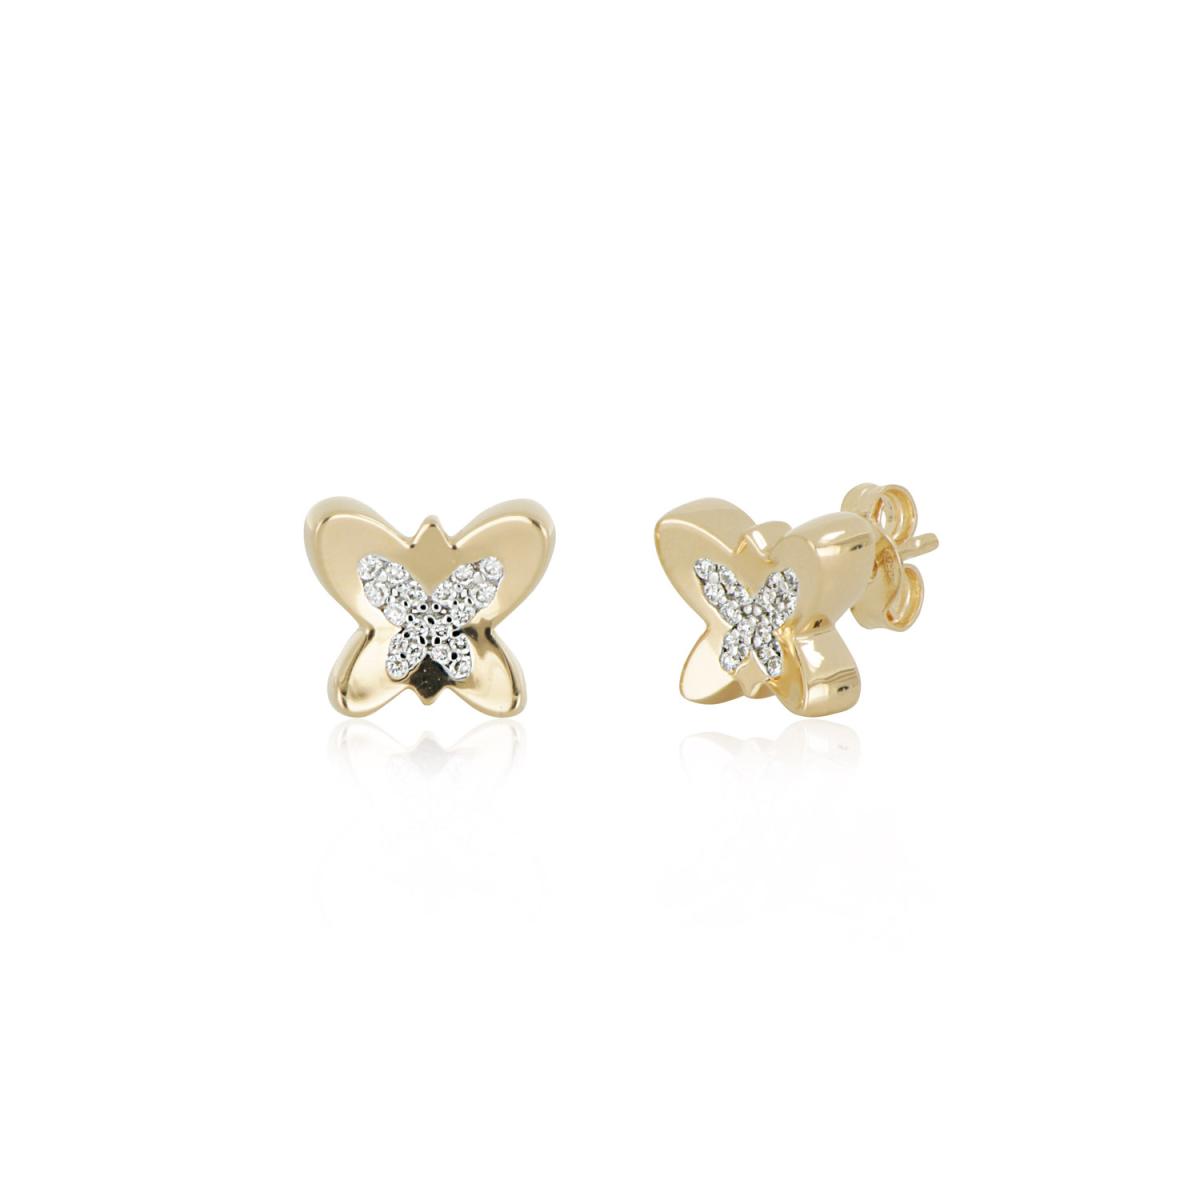 Butterfly earrings in gold and diamonds - OD851